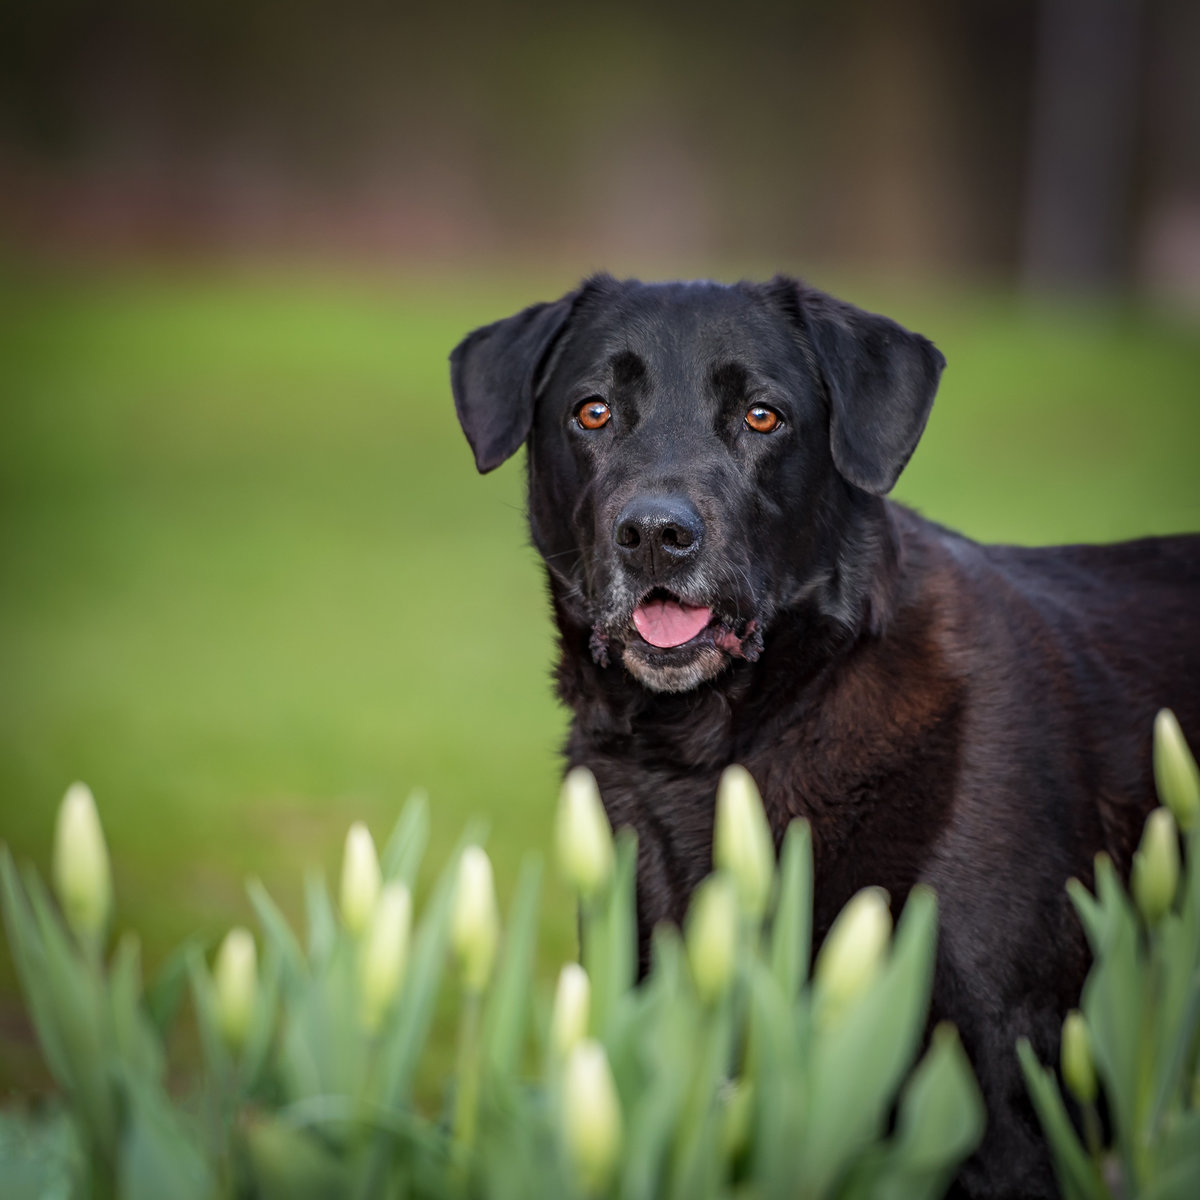 Sweet Black Labrador Retriever peering from white tulips